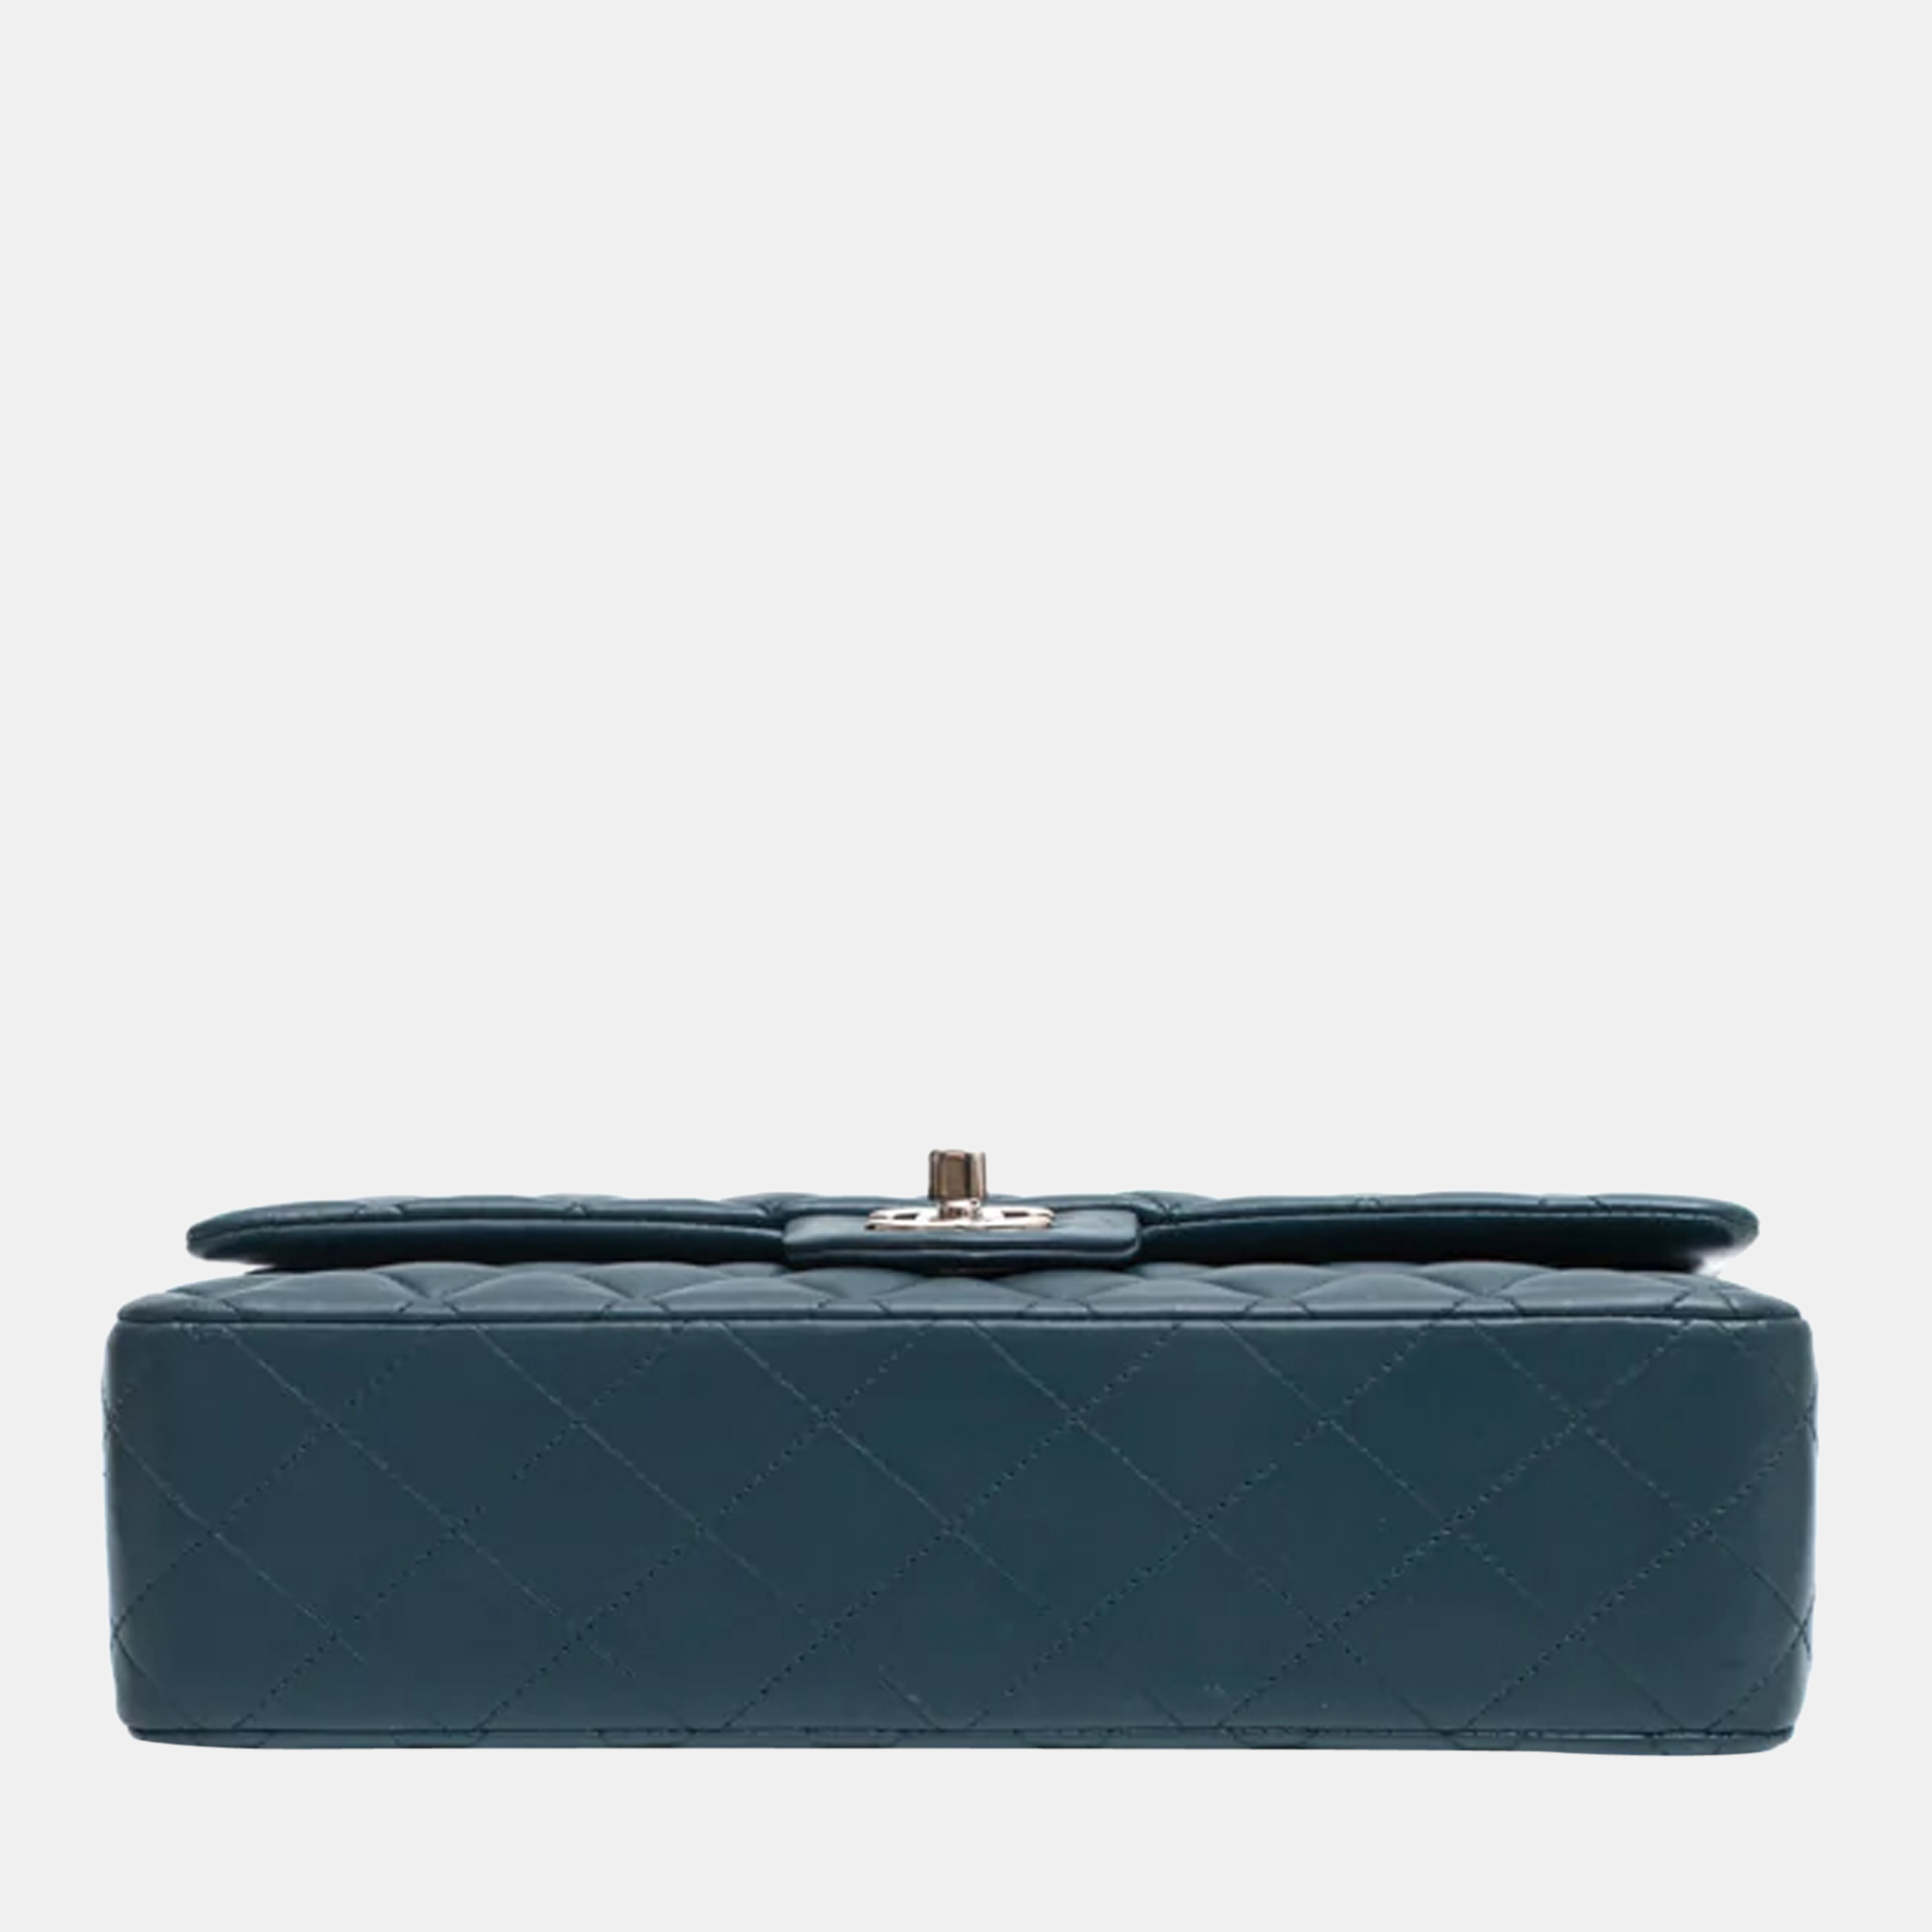 Chanel Blue Leather Medium Classic Double Flap Bag